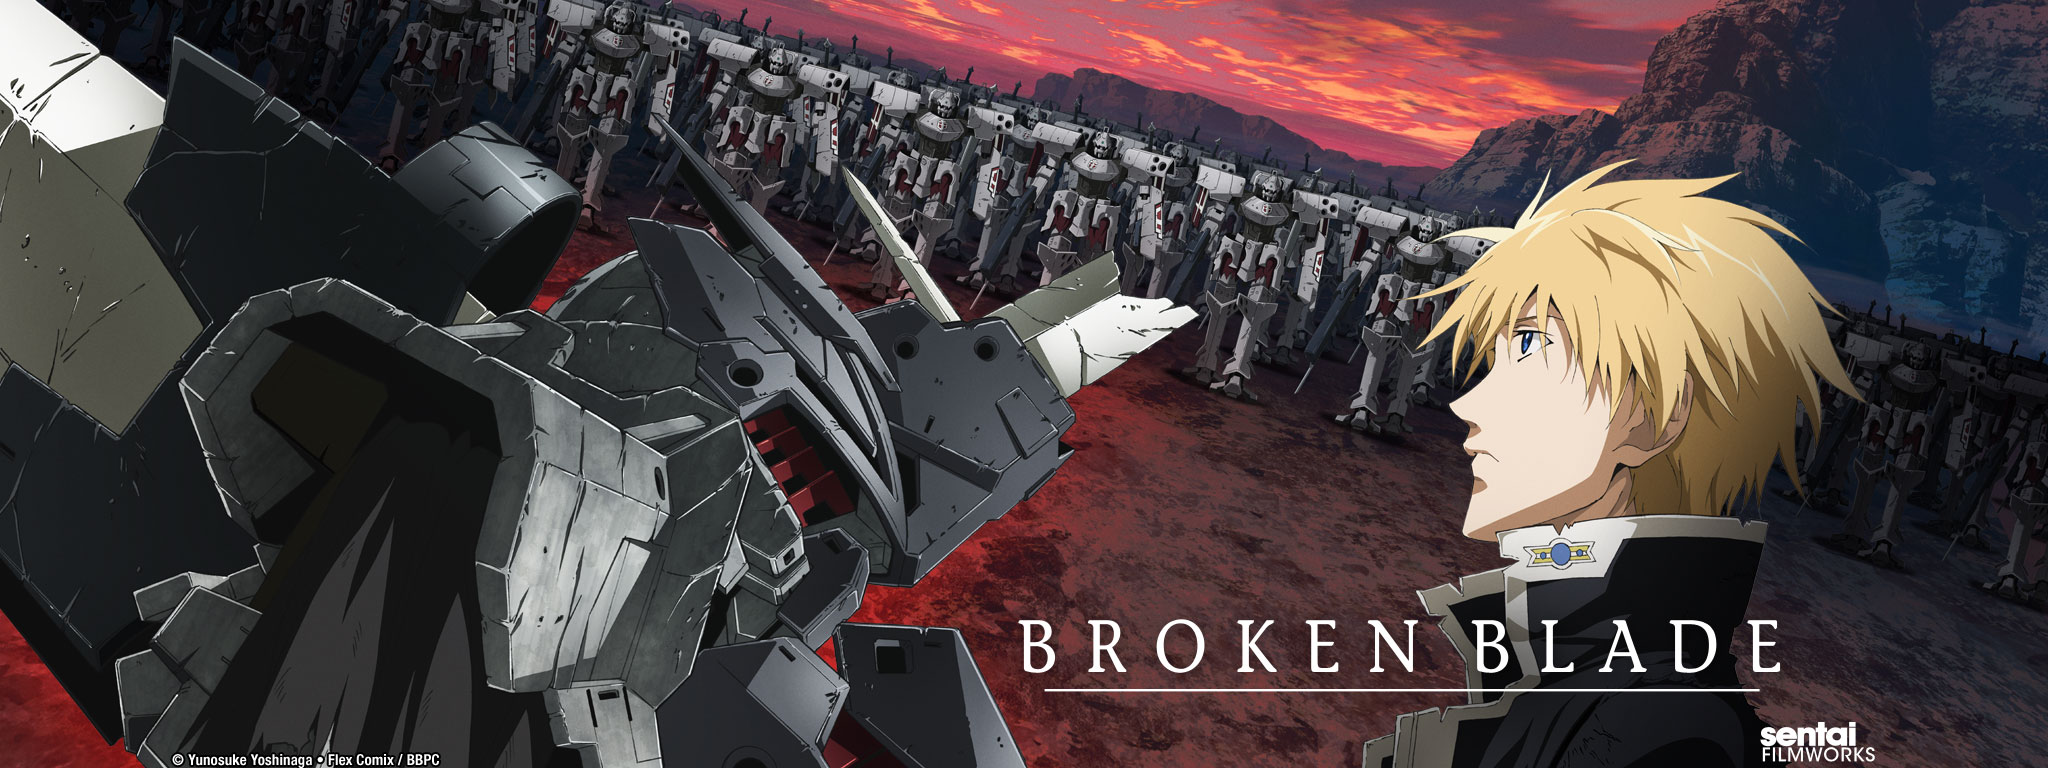 Title Art for Broken Blade